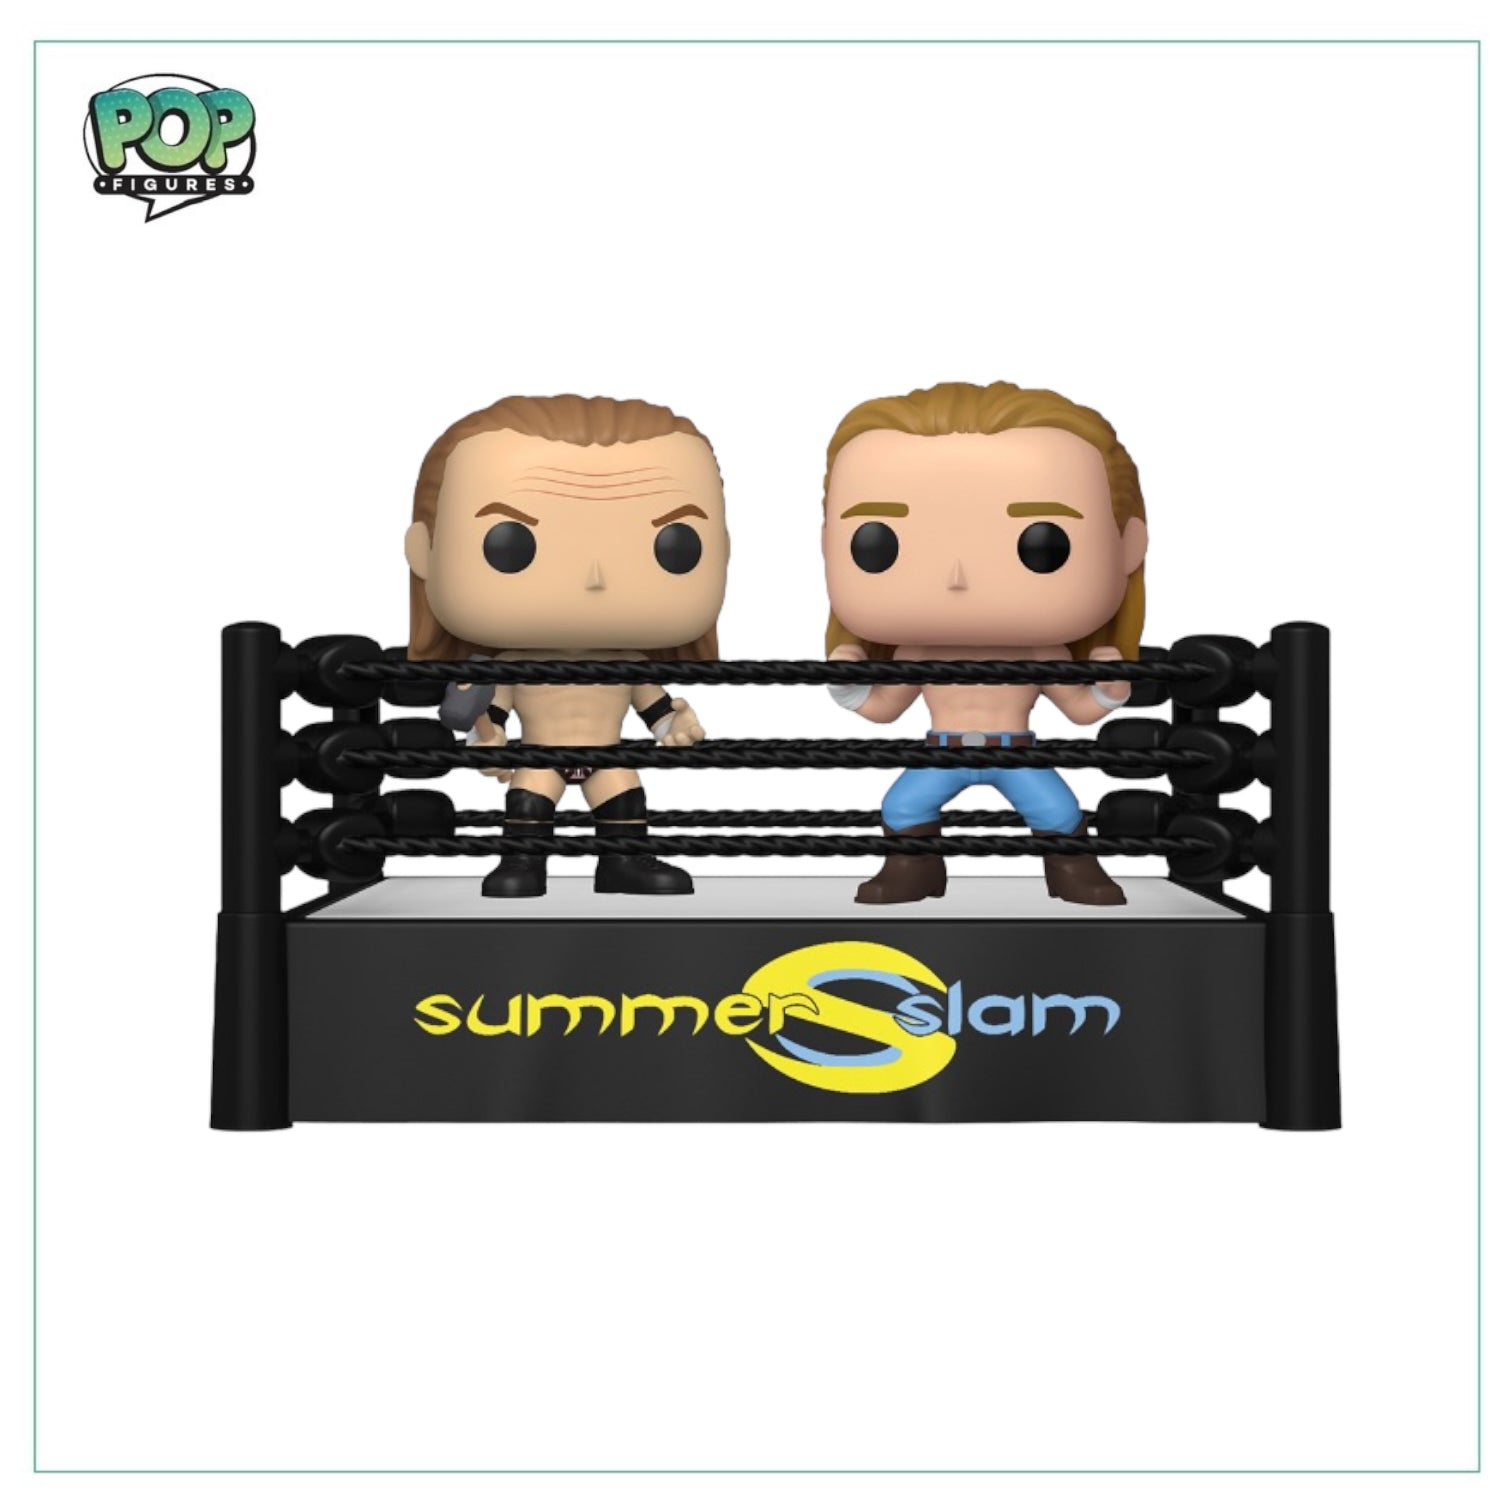 Triple H and Shaun Michael 2 Pack Funko Pop! - WWE